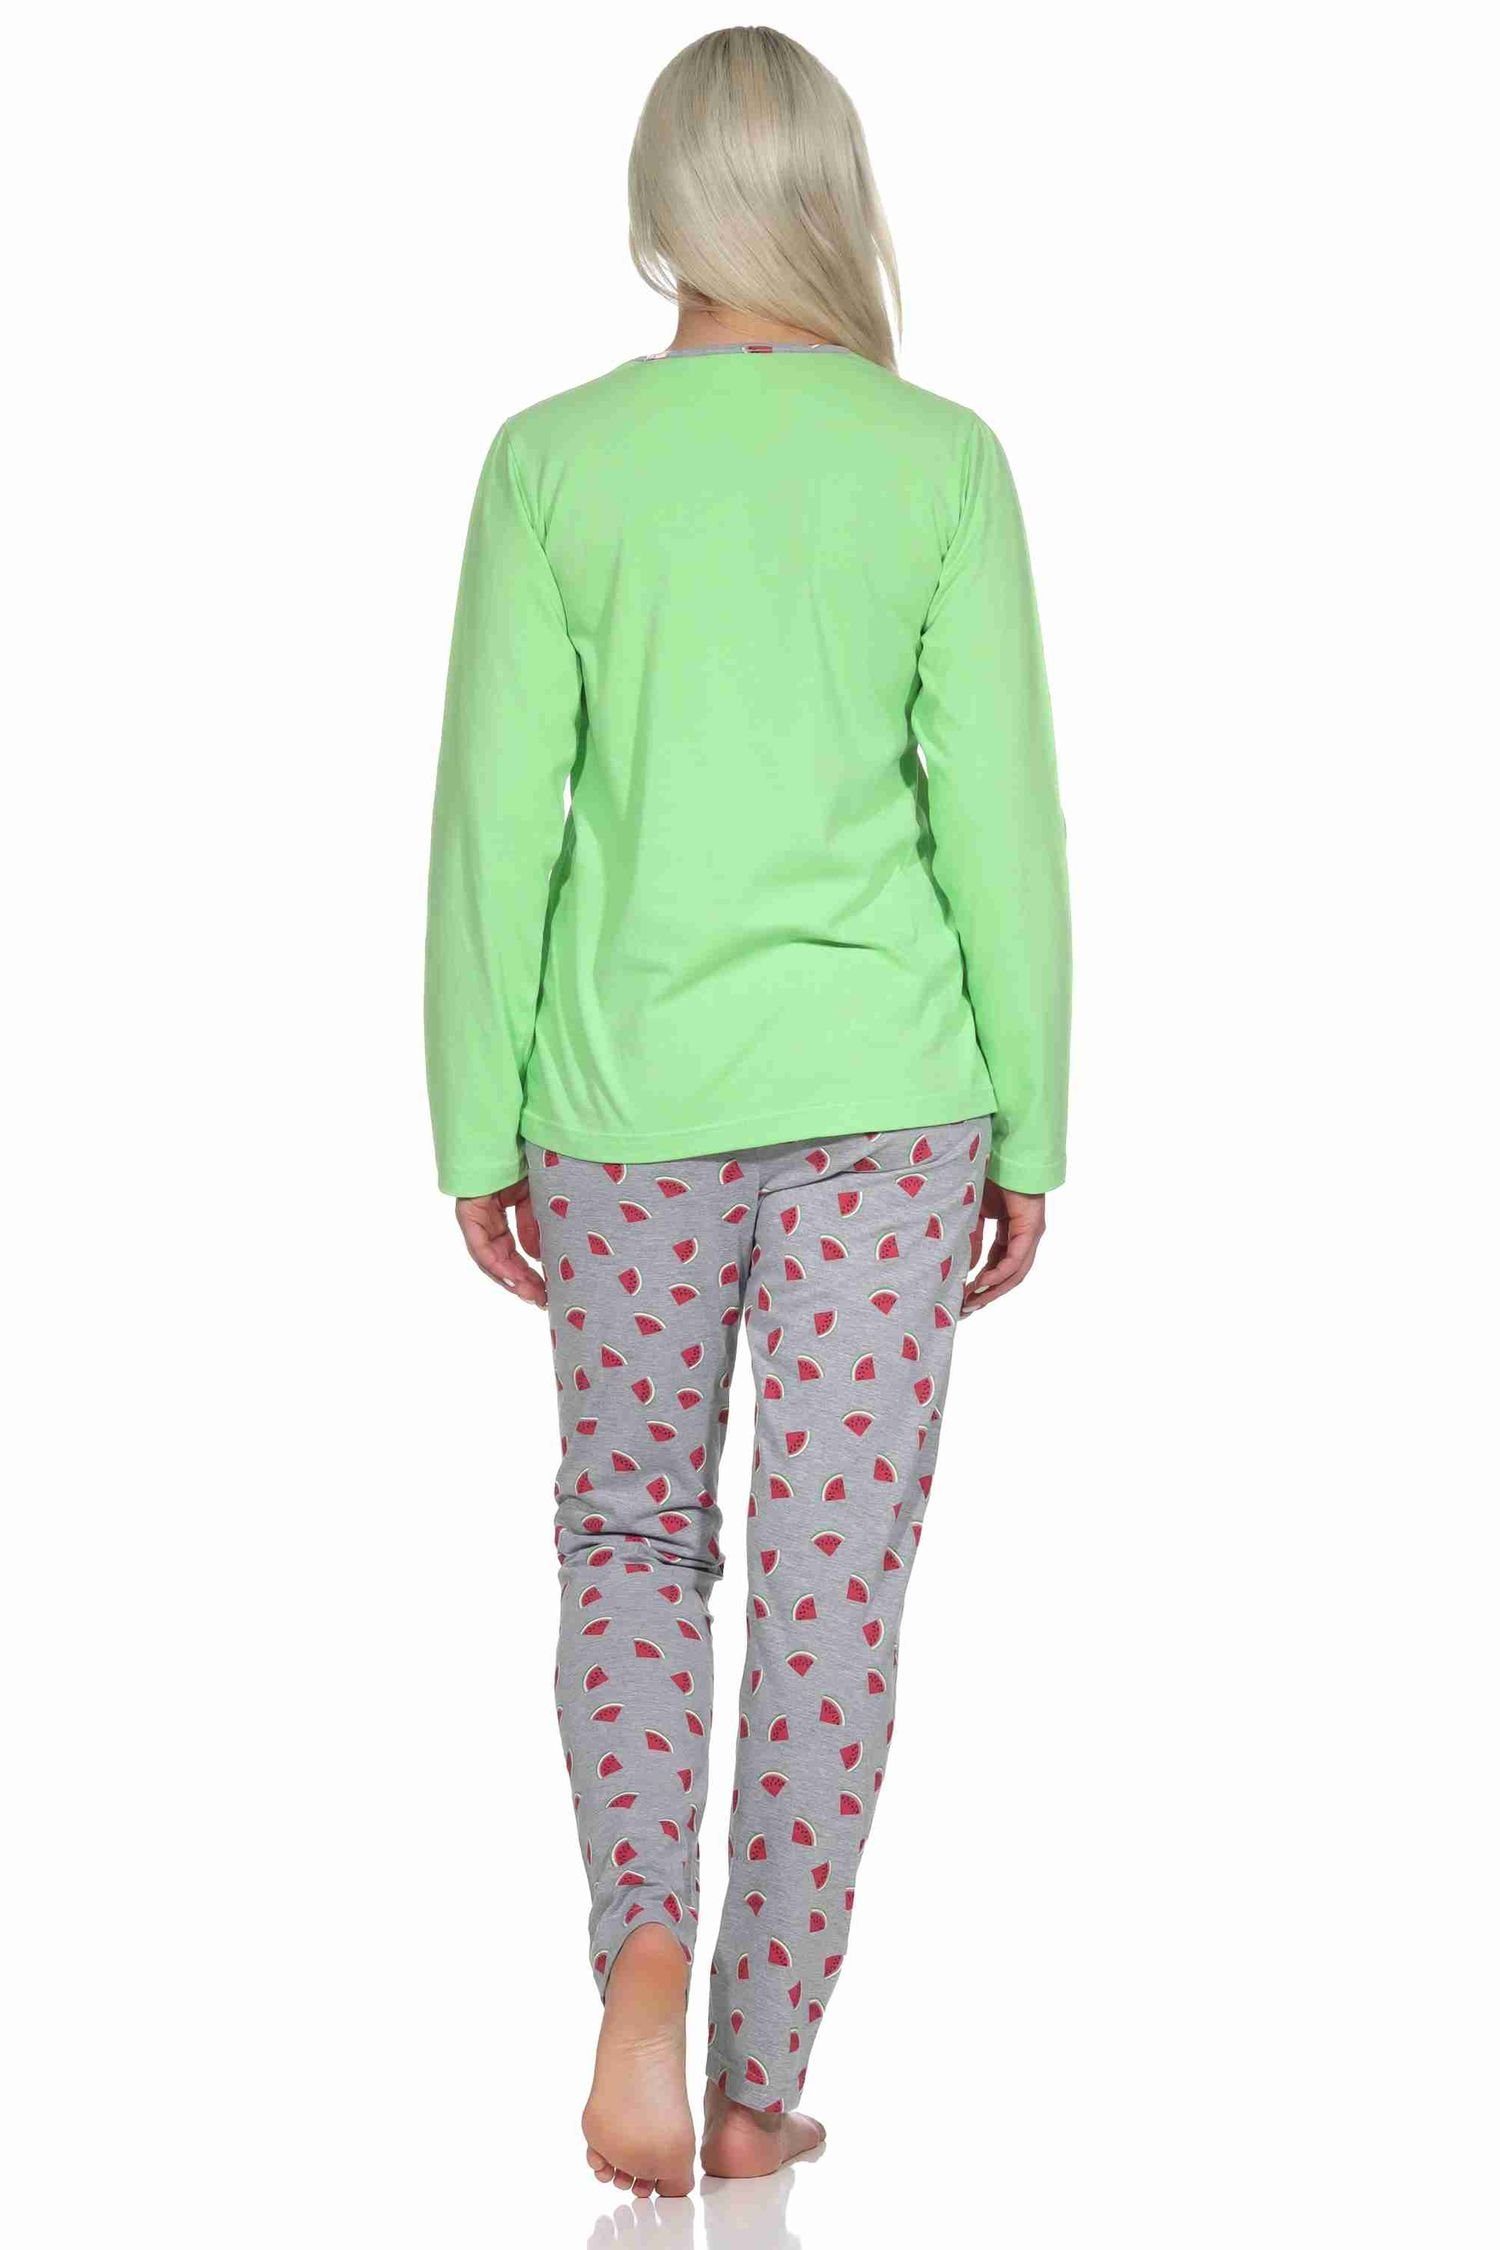 Schlafanzug Pyjama lang allover grün bedruckt Damen als Melone mit Motiv, Normann Hose